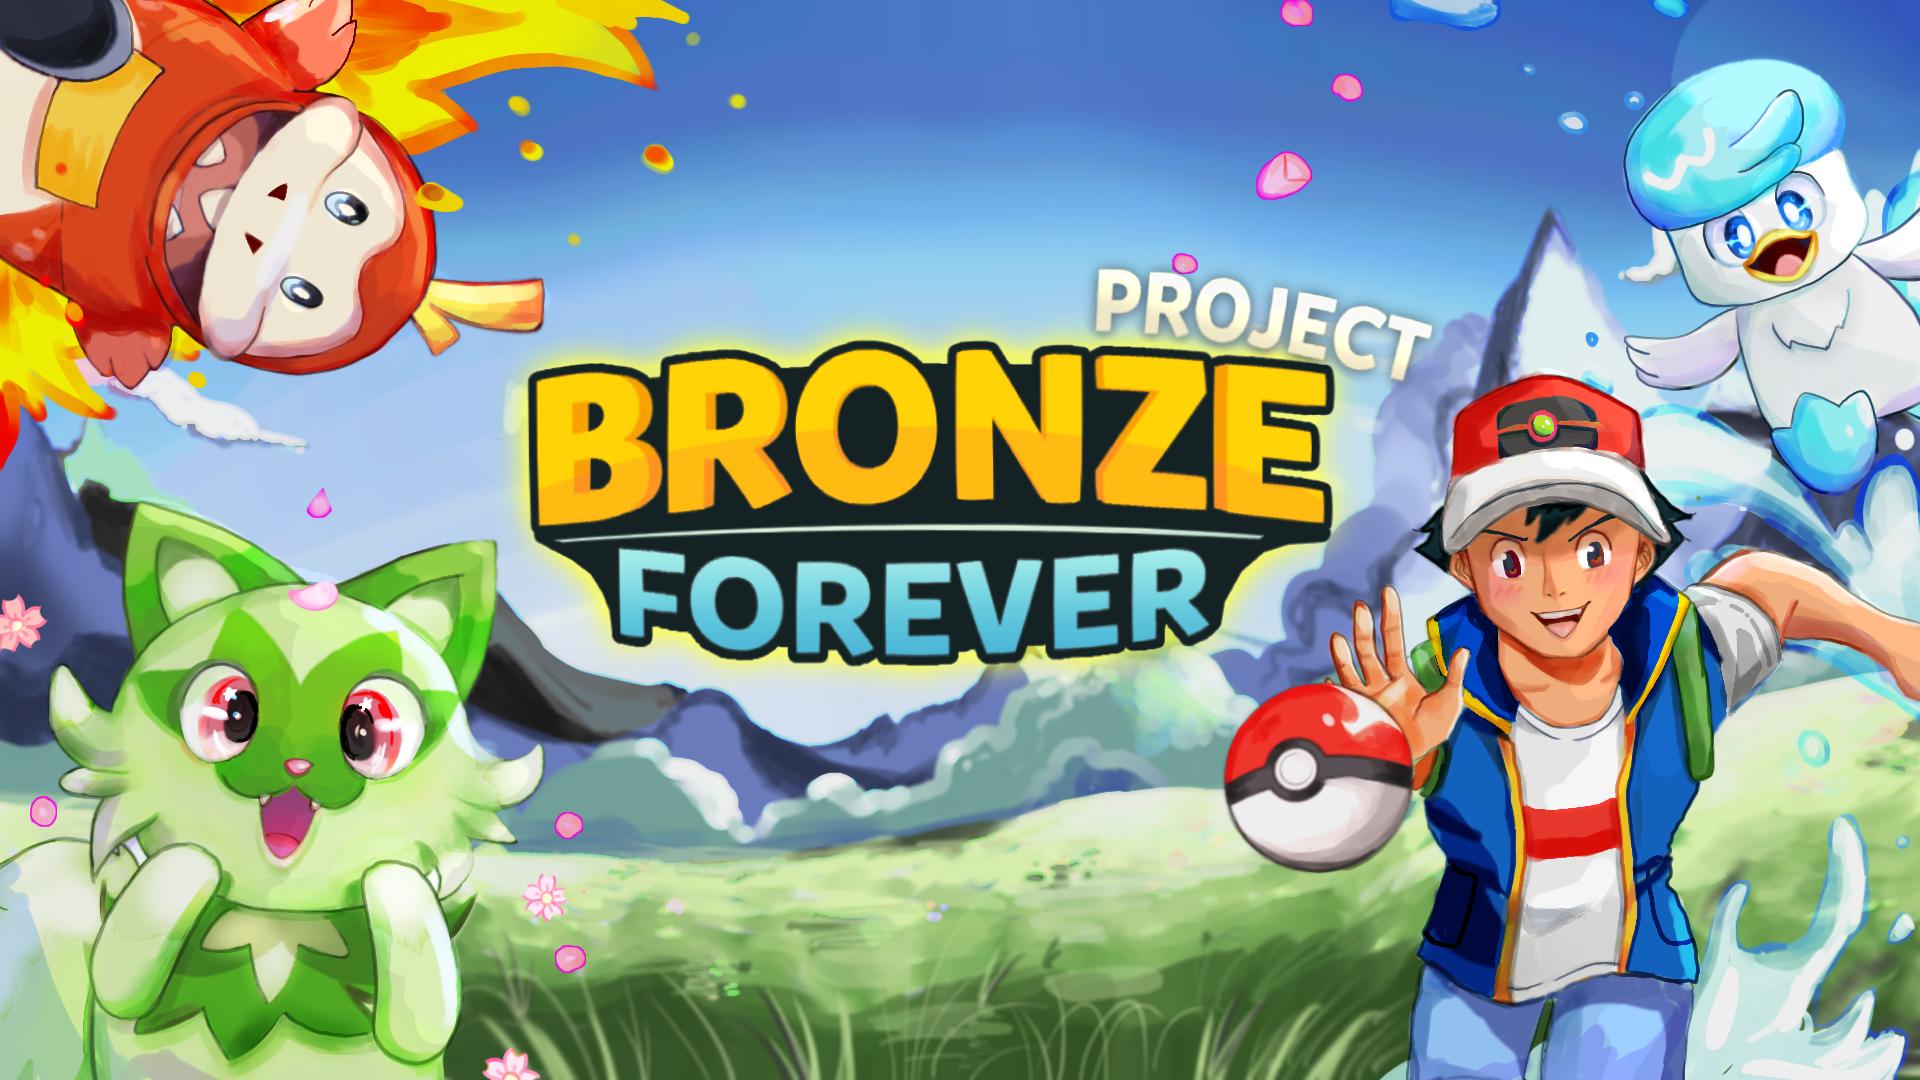 Pokemon: Project Bronze Forever - Discord Server for Pokemon, Roblox